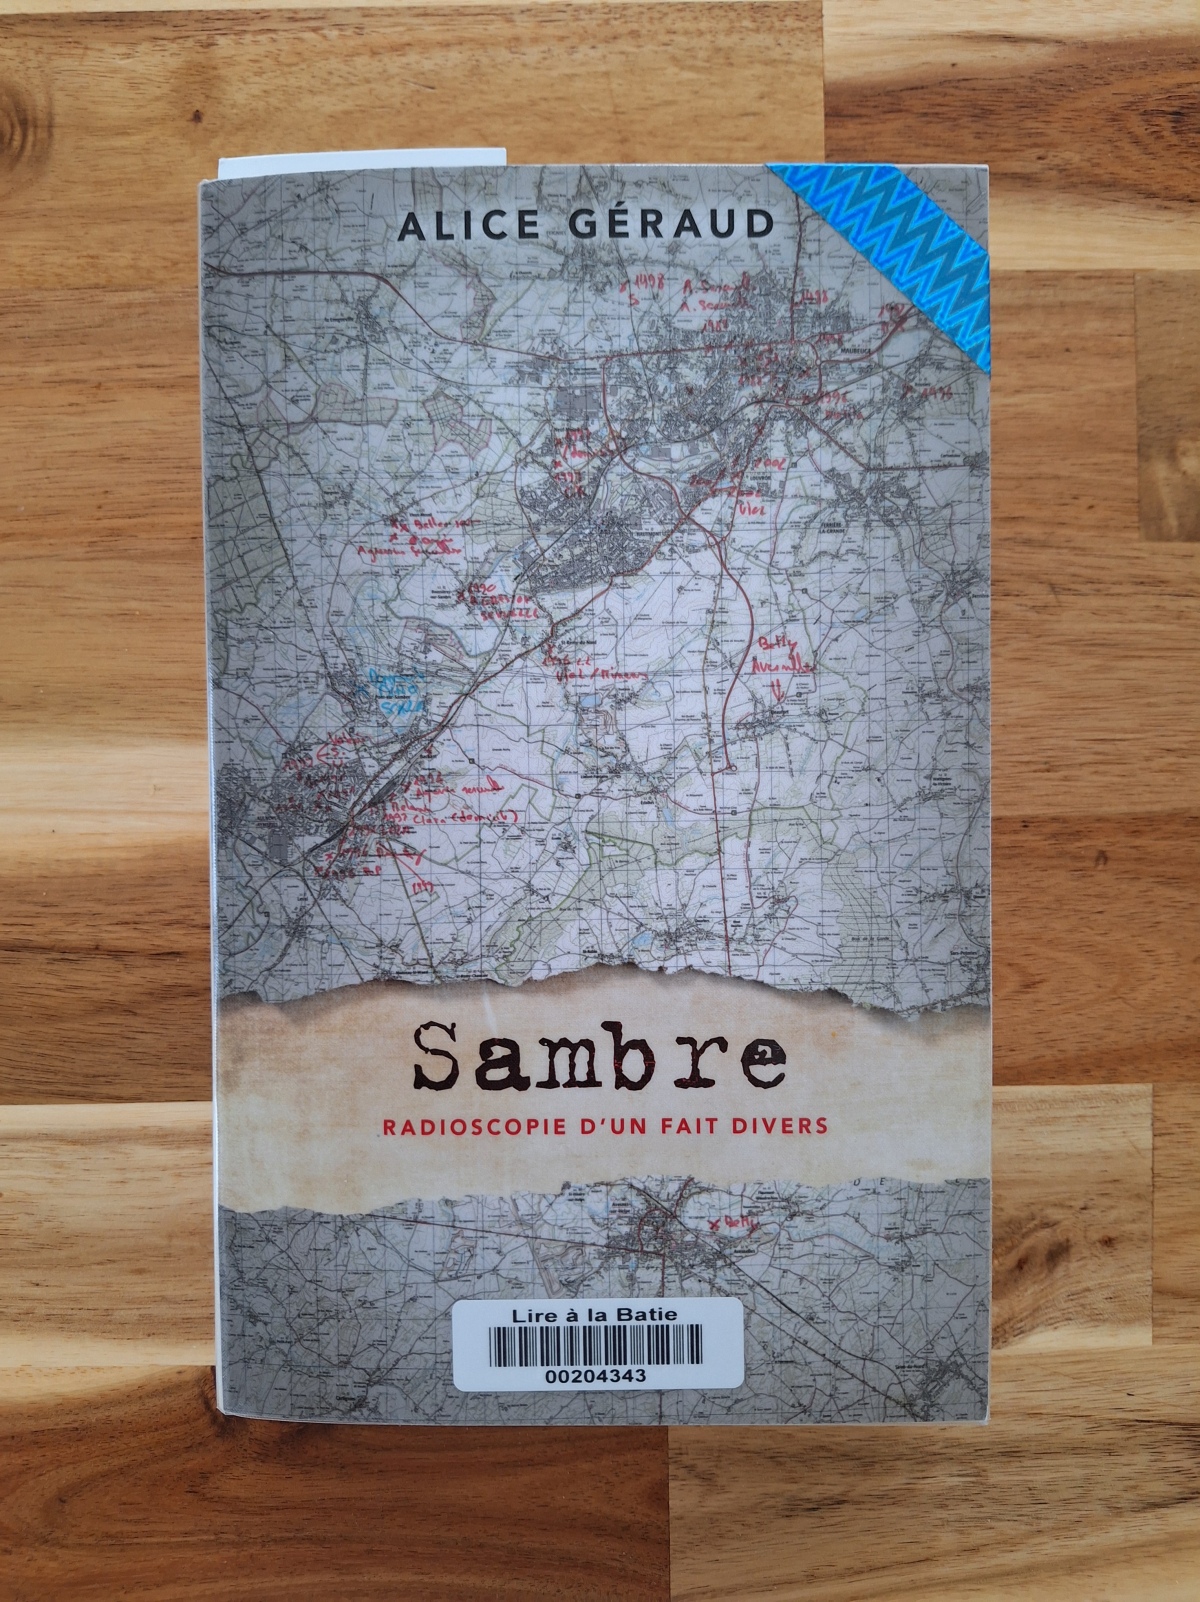 Sambre / Alice Géraud